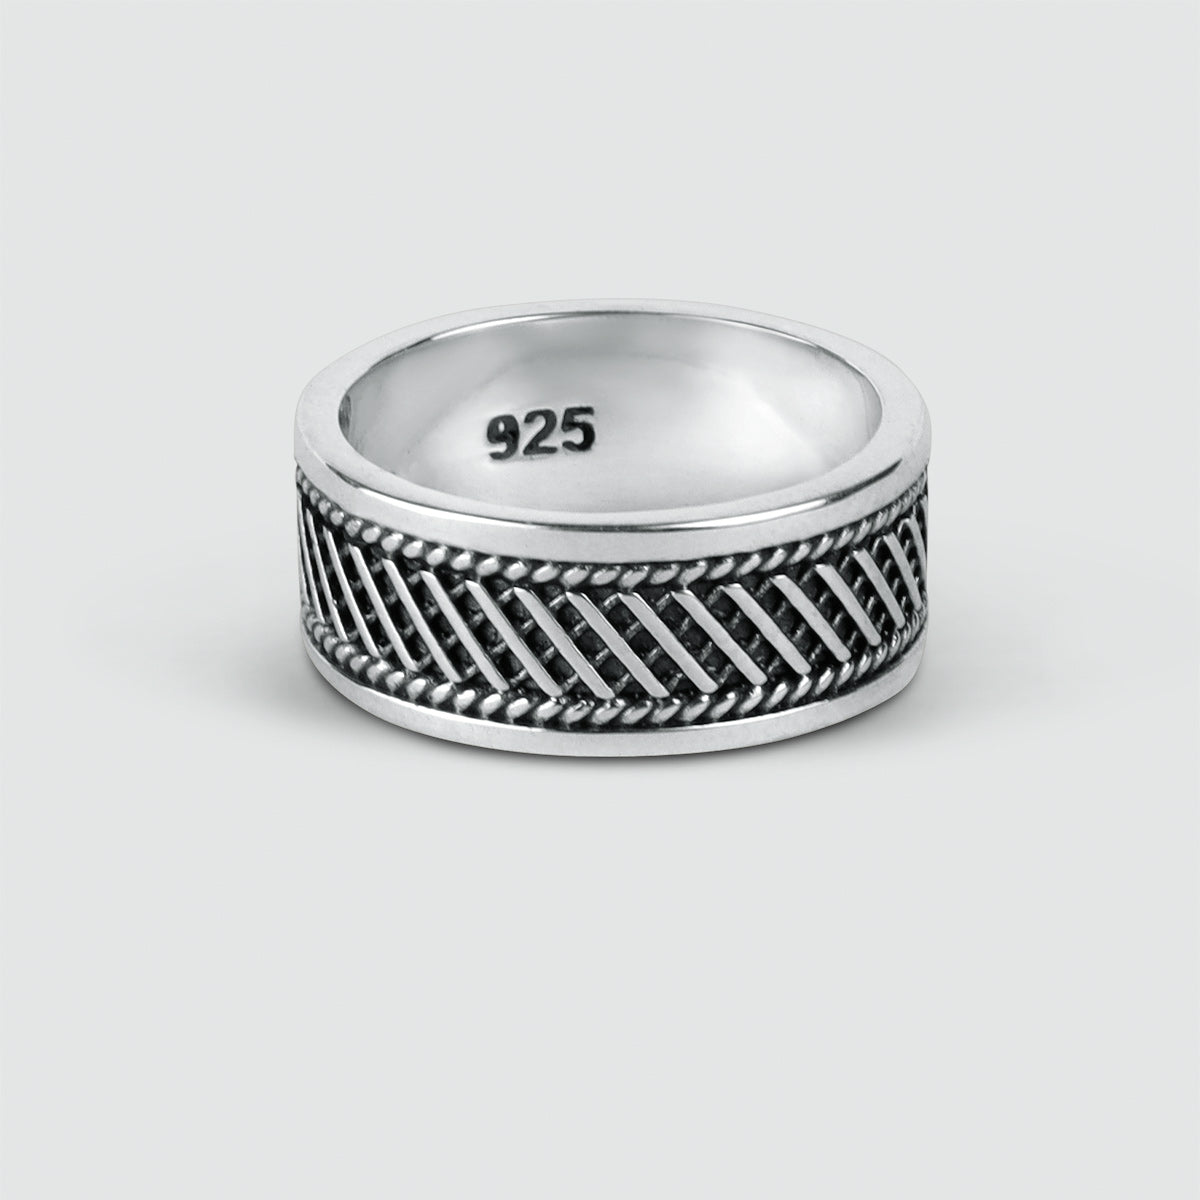 Women's Silver Ring | Long Green Stone Design Ring |